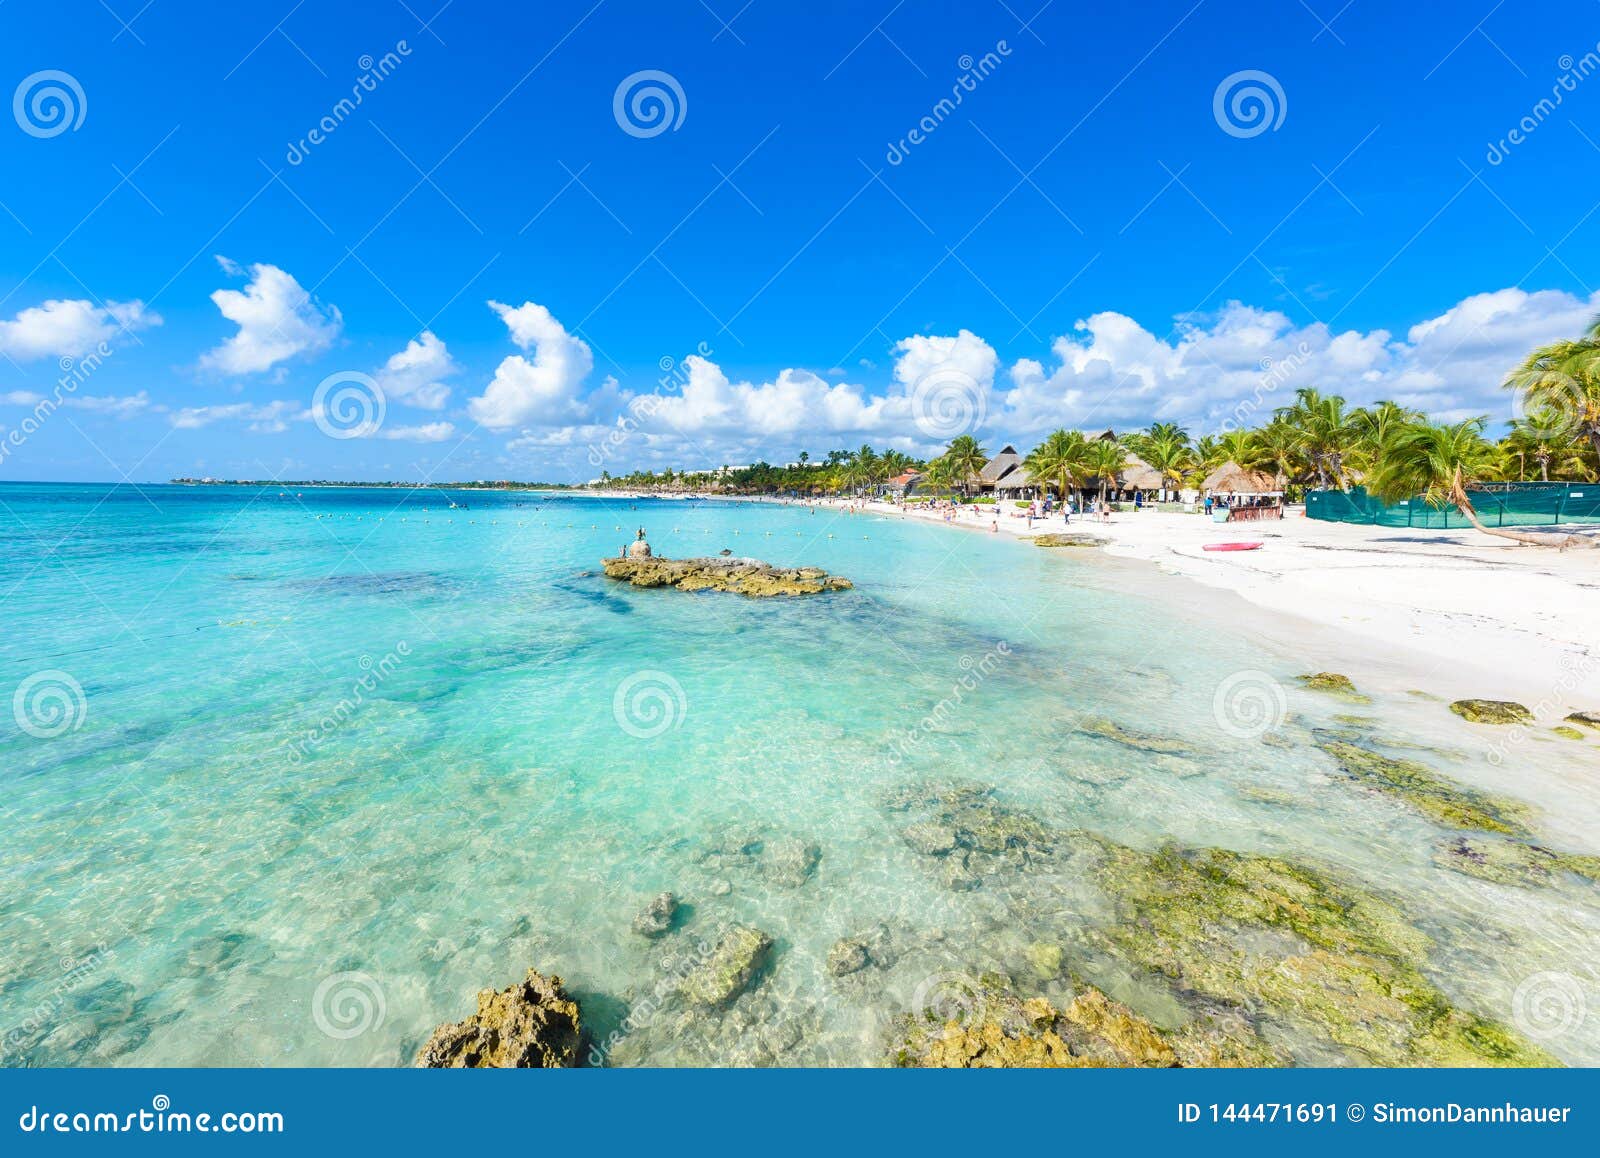 Riviera Maya - Paradise Beach Akumal at Cancun, Quintana Roo, Mexico -  Caribbean Coast - Tropical Destination for Vacation Editorial Photo - Image  of background, perfect: 144471691